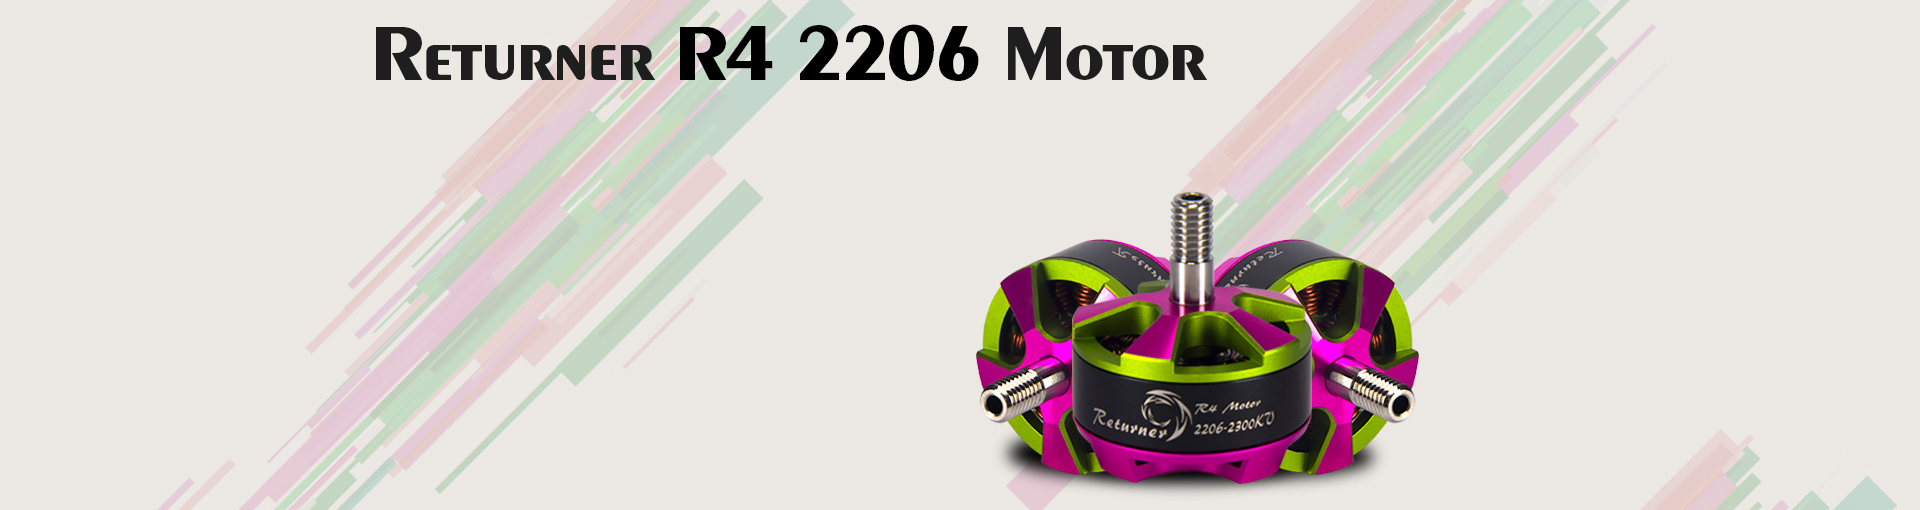 Returner R4 2206 Motor